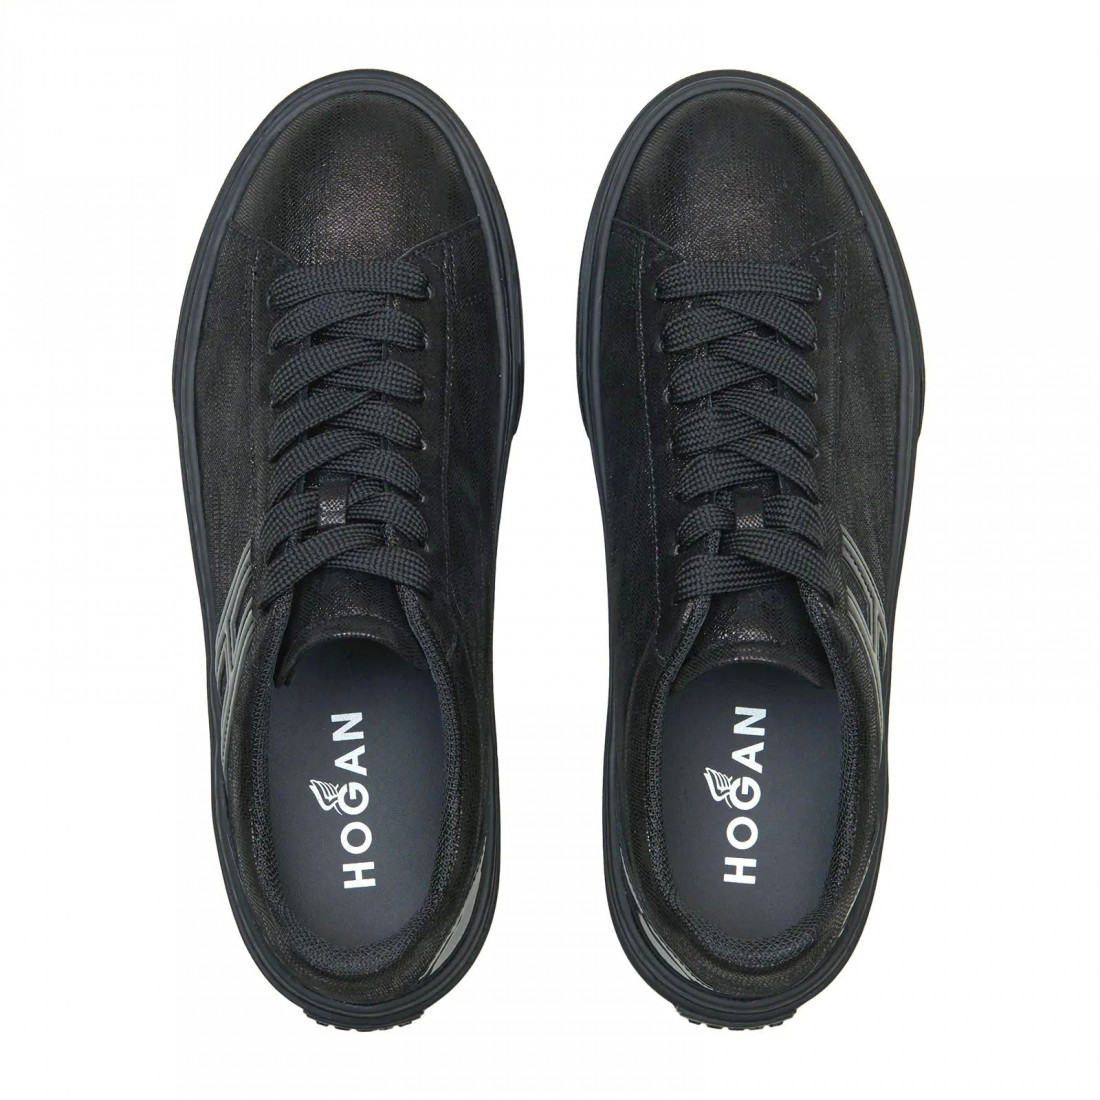 Sneaker da donna Hogan H365 nera in pelle laminata